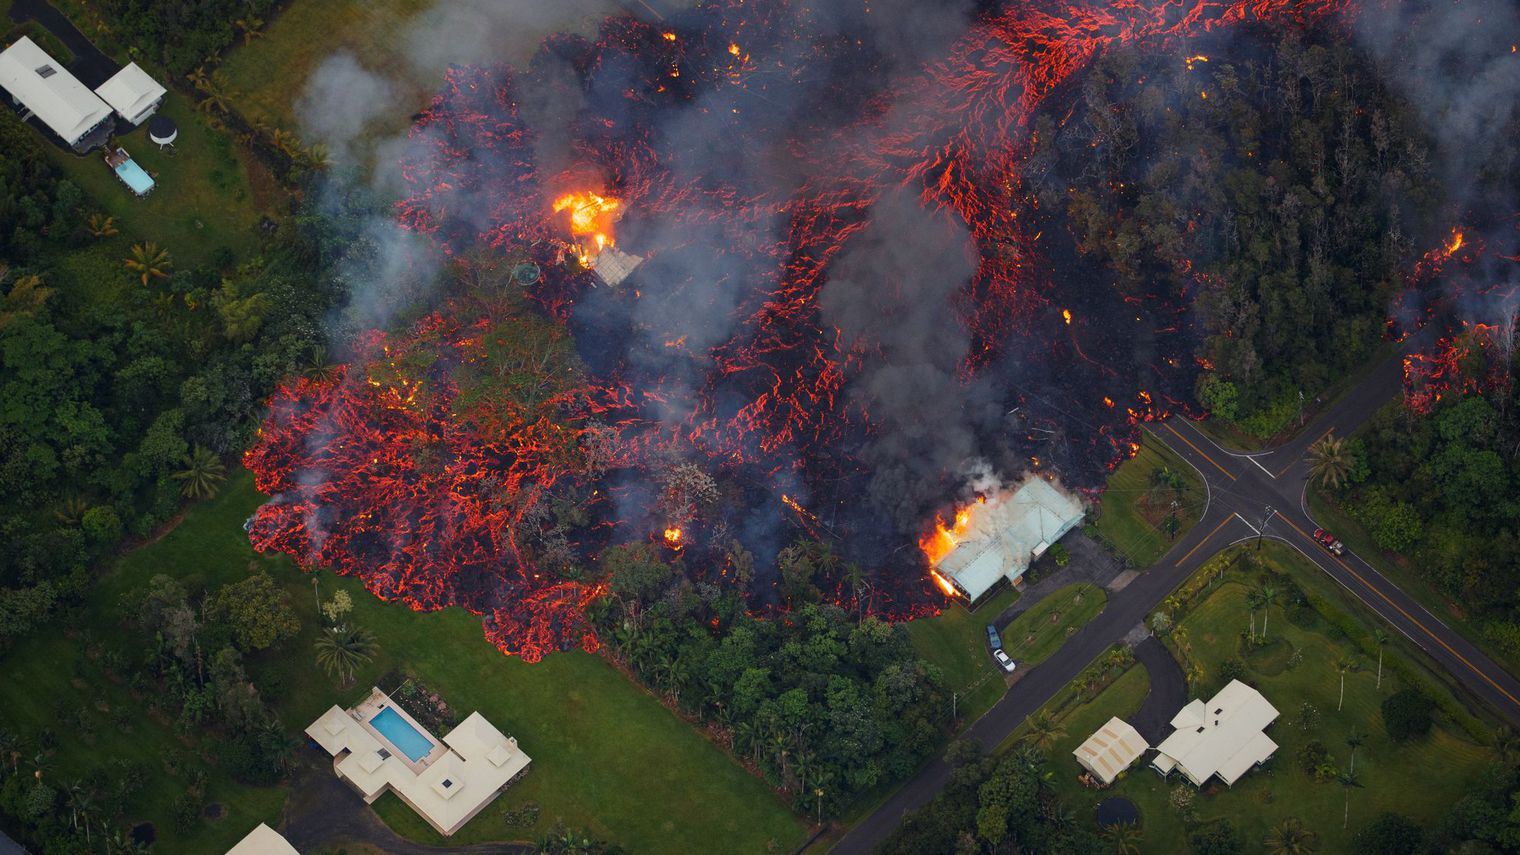 Nom : hawaii-s-kilauea-volcano-eruption_6056022.jpg
Affichages : 146
Taille : 230,4 Ko